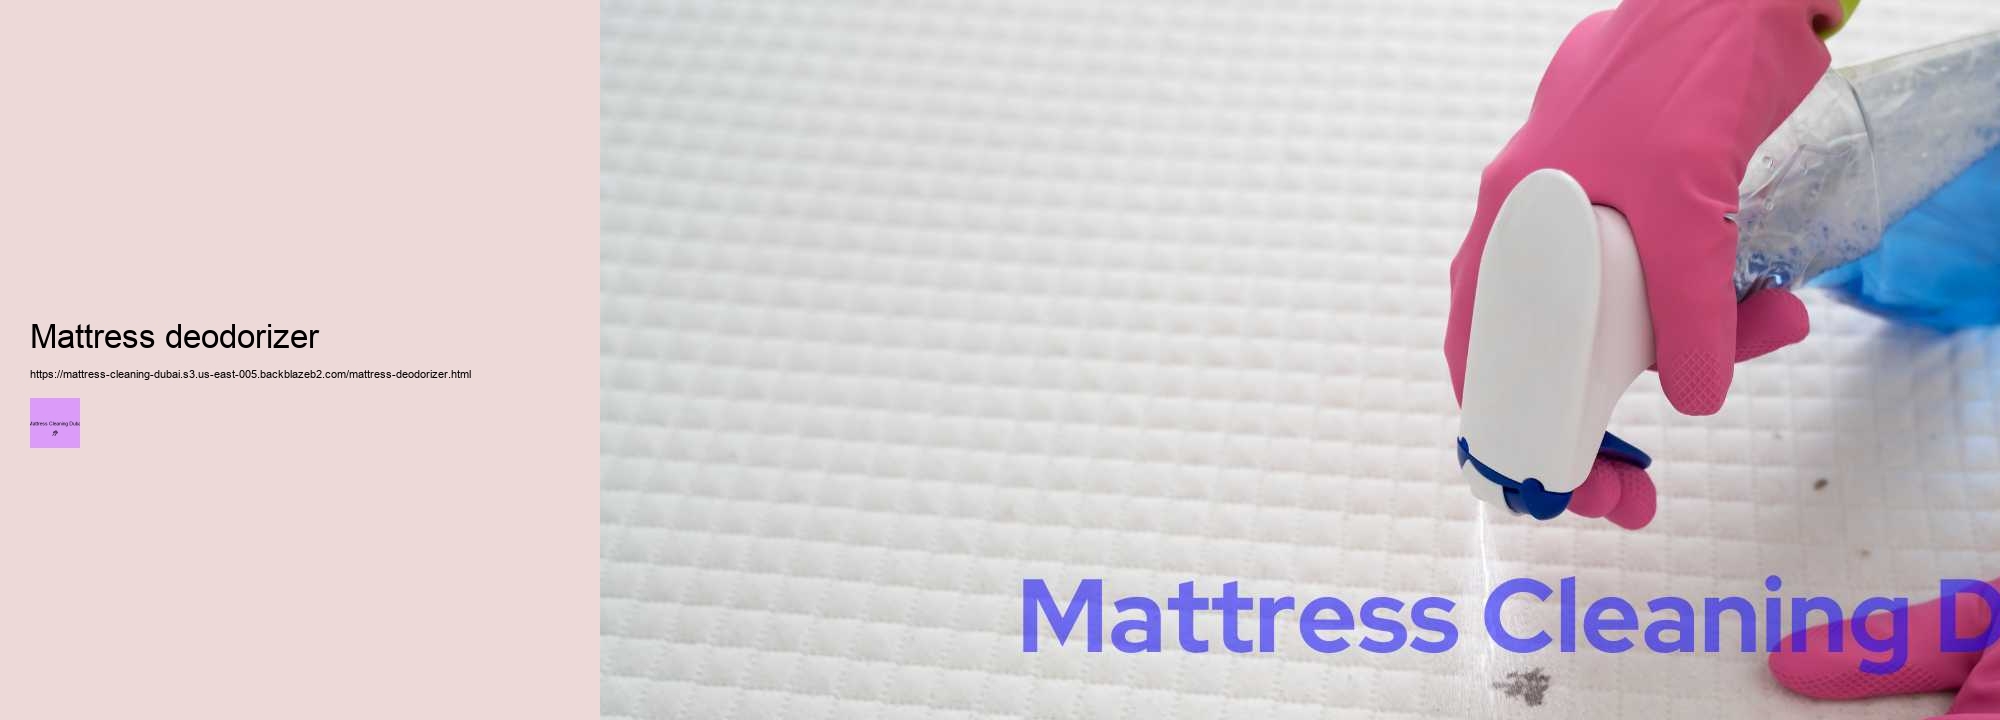 Mattress deodorizer